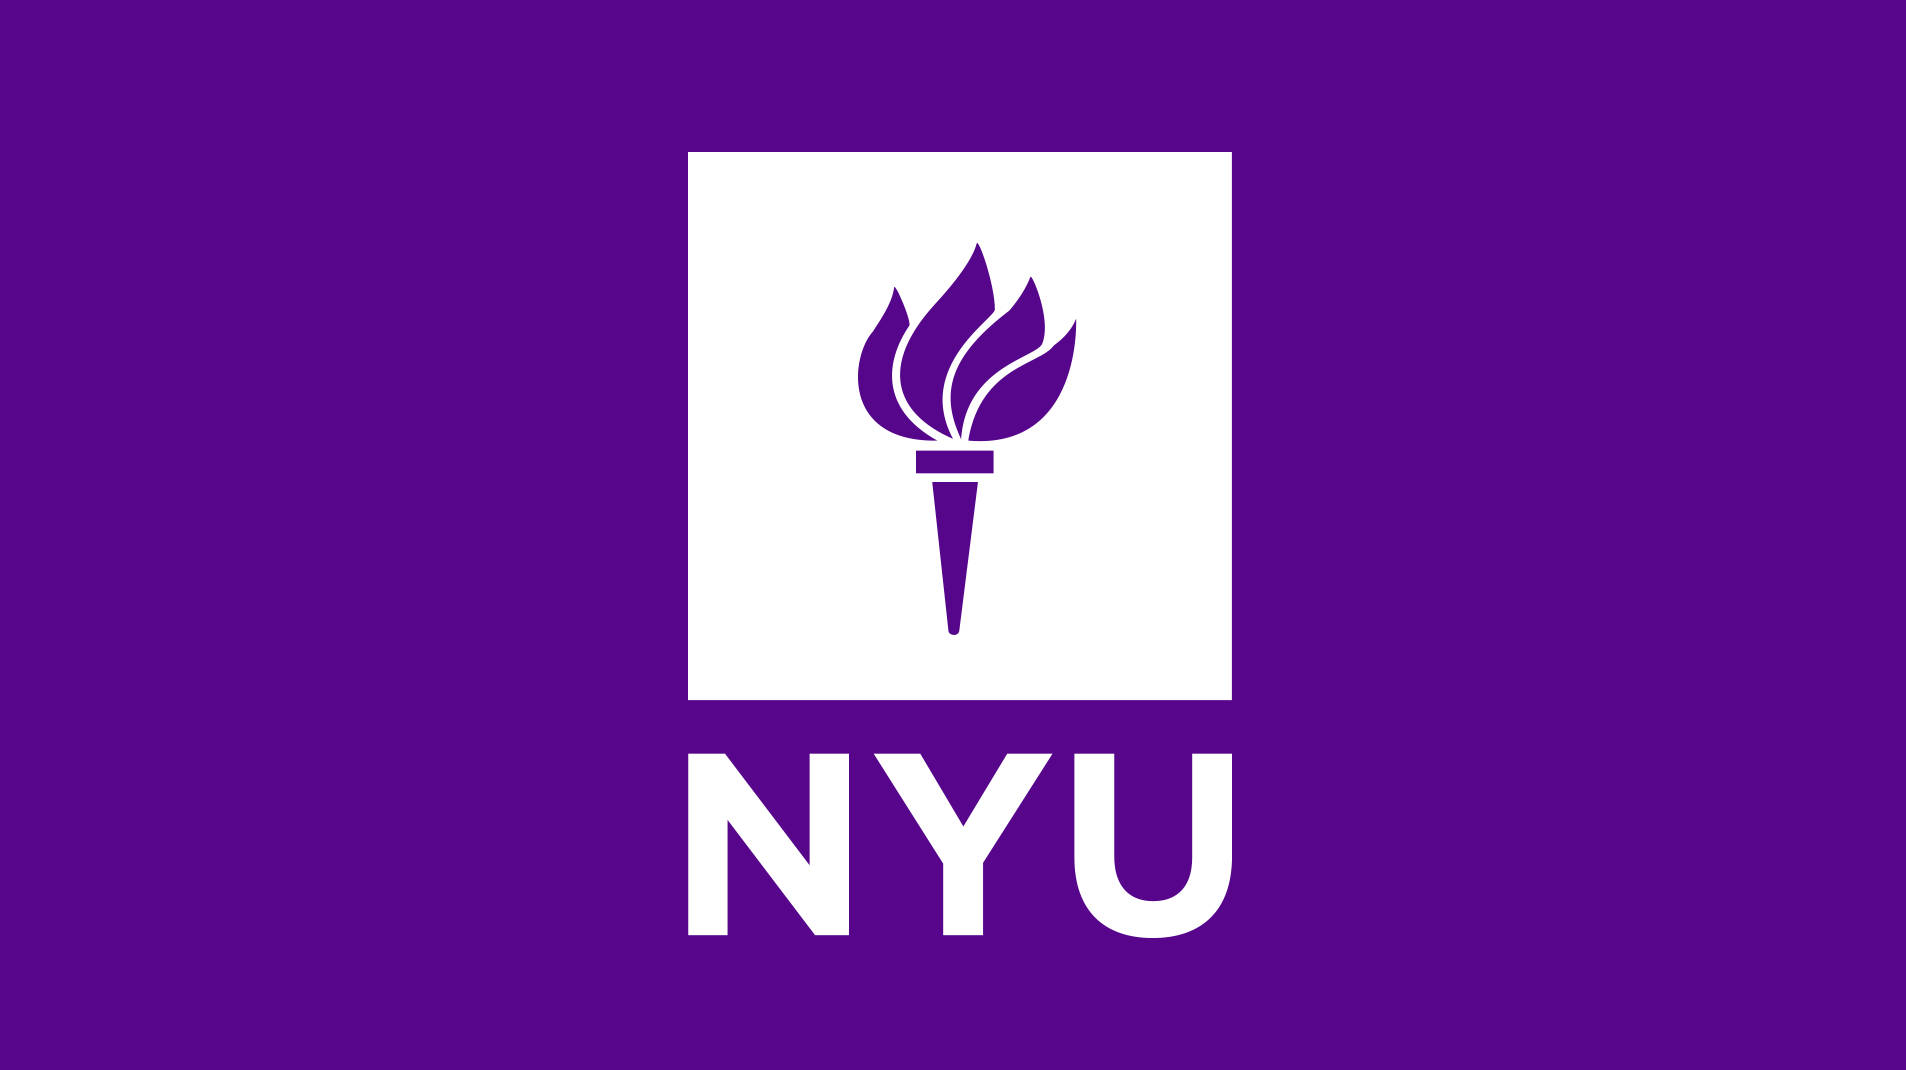 NYU Vibrant Purple Logo on a Dark Background Wallpaper